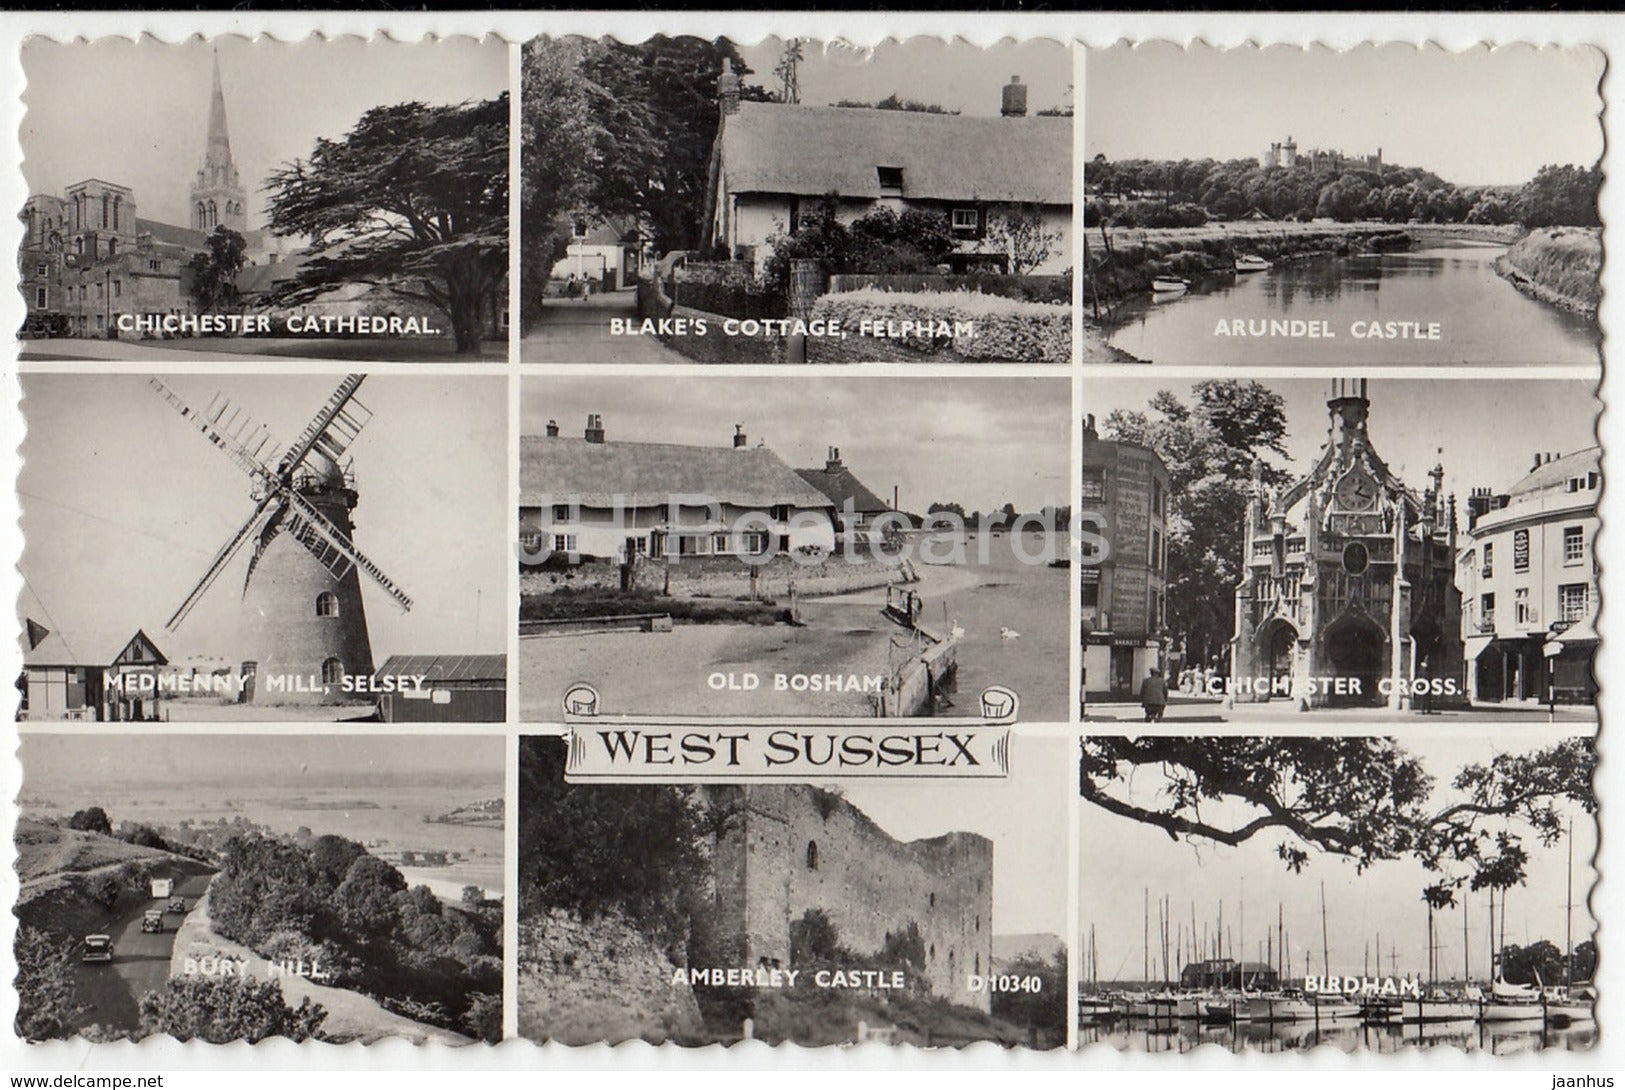 West Sussex - Chichester - Arundel - Medmenny Windmill - Old Bosham - multiview - 1963 - United Kingdom - England - used - JH Postcards